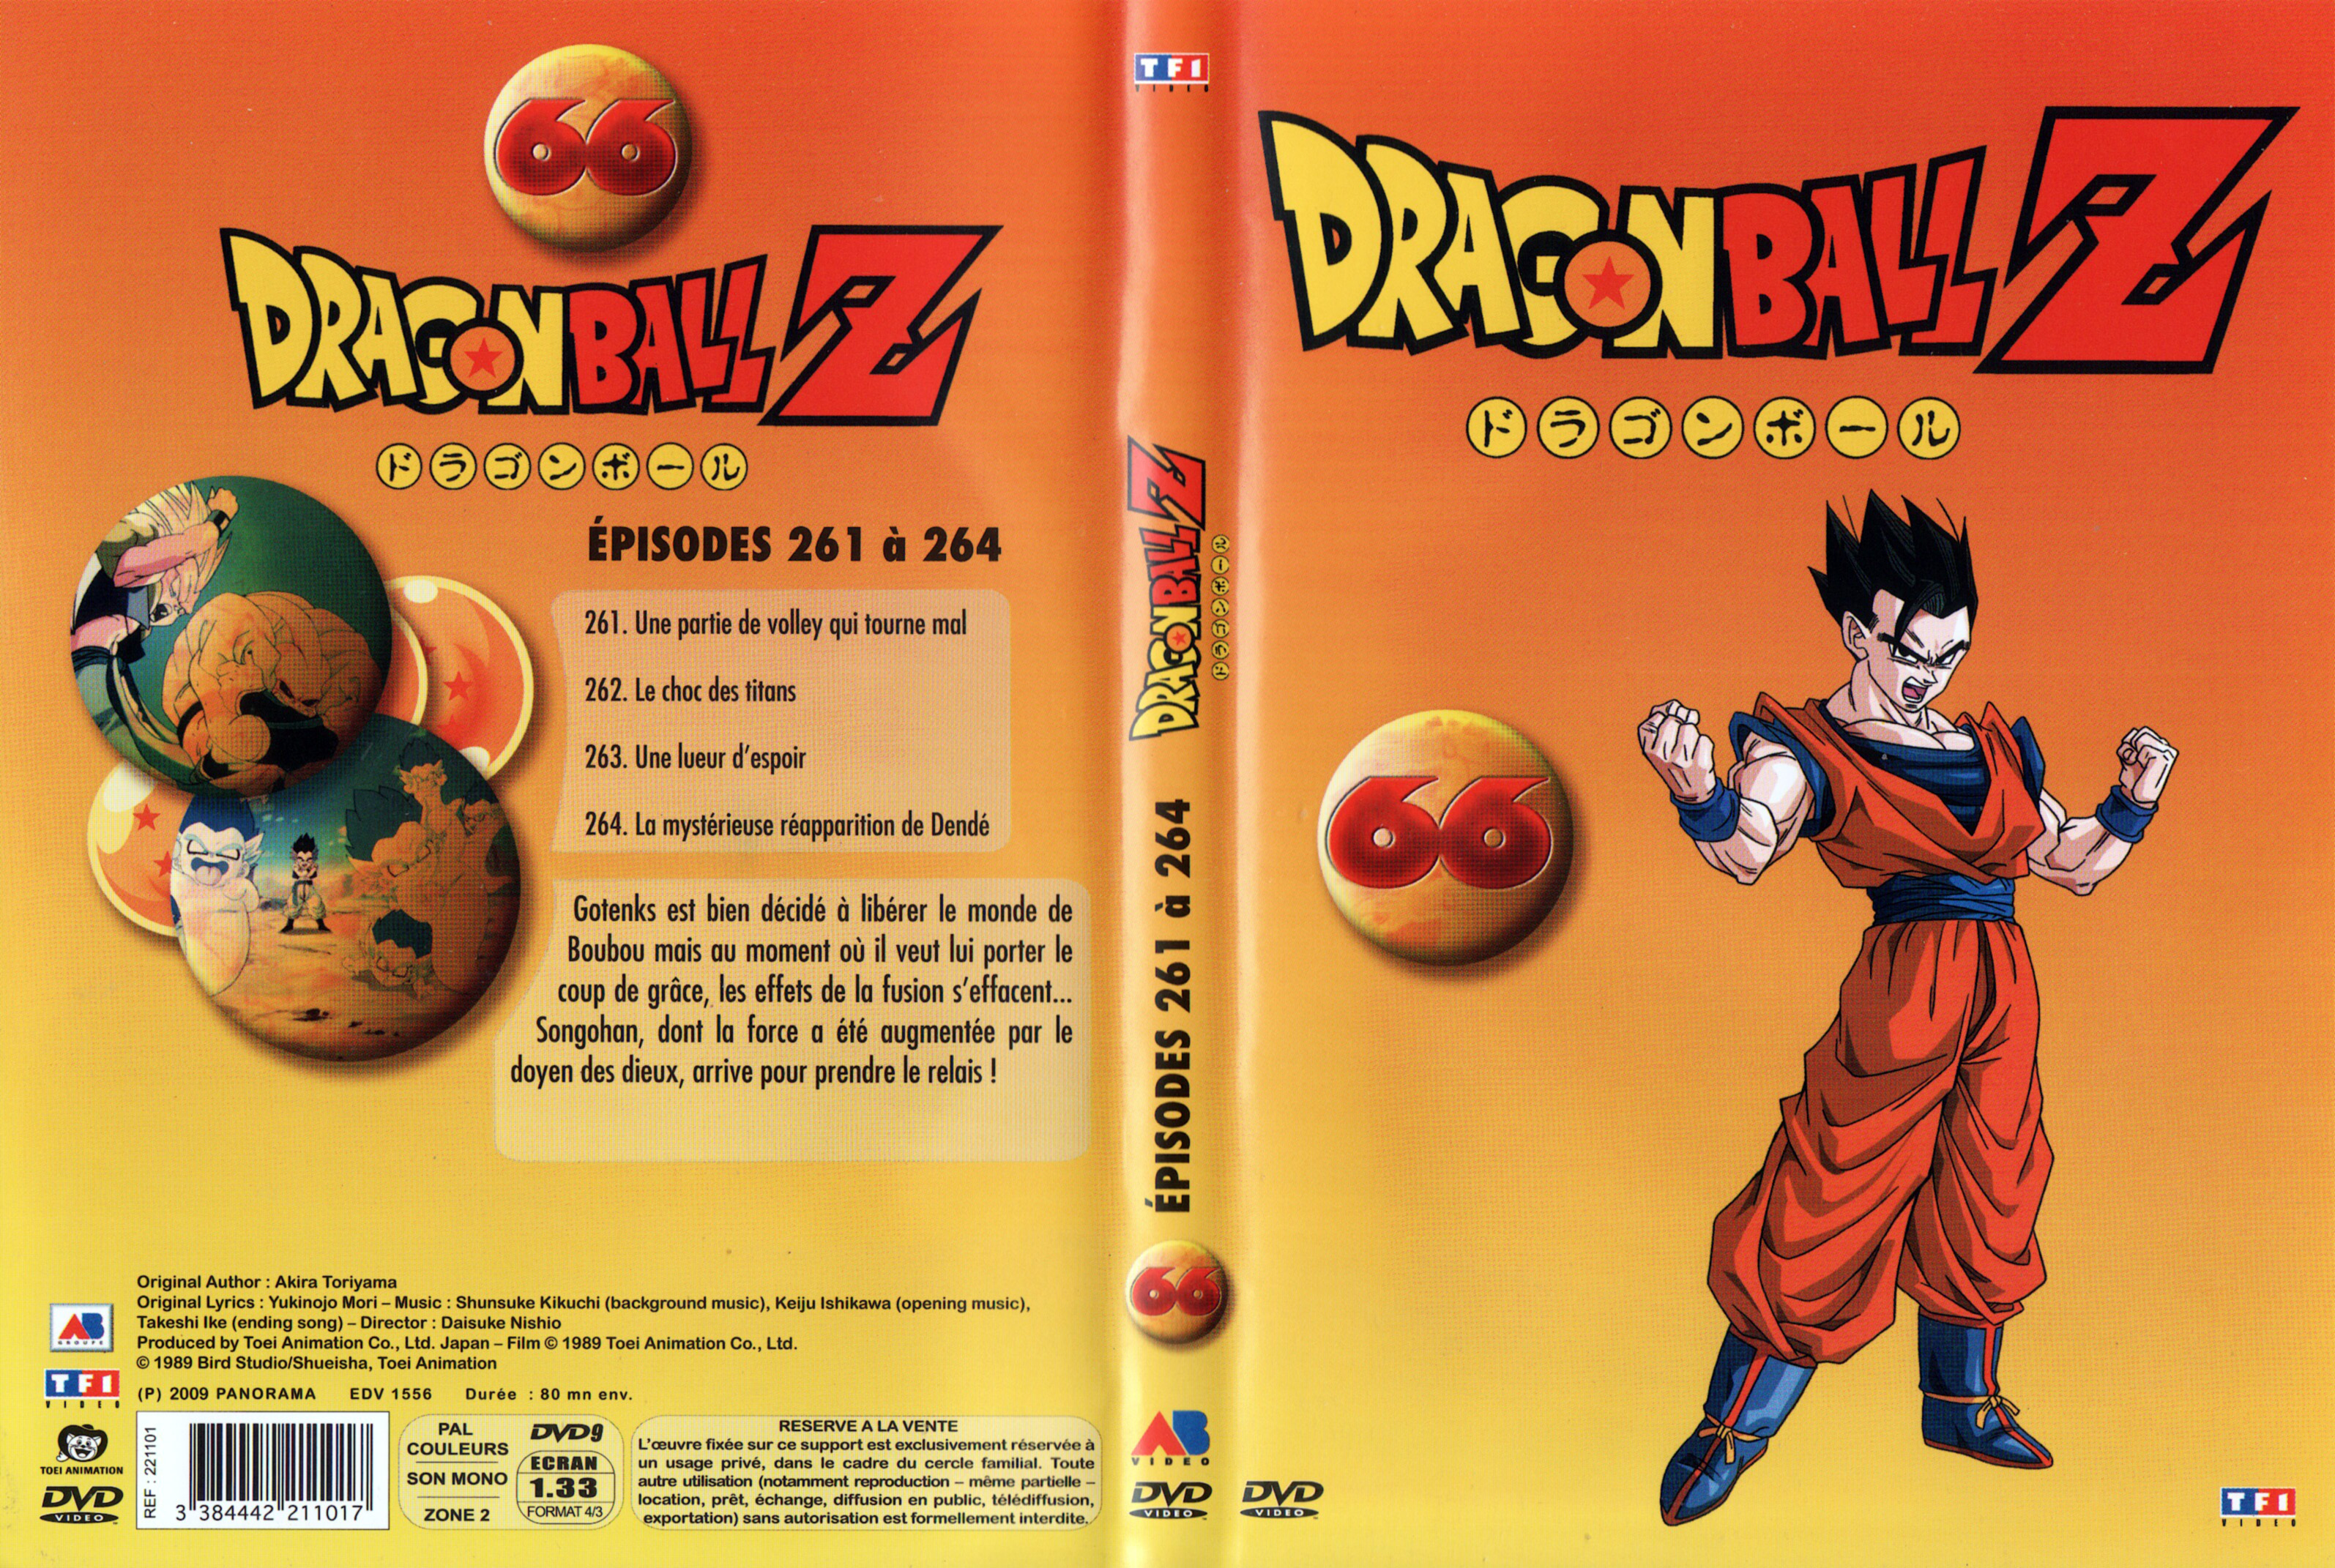 Jaquette DVD Dragon Ball Z vol 66